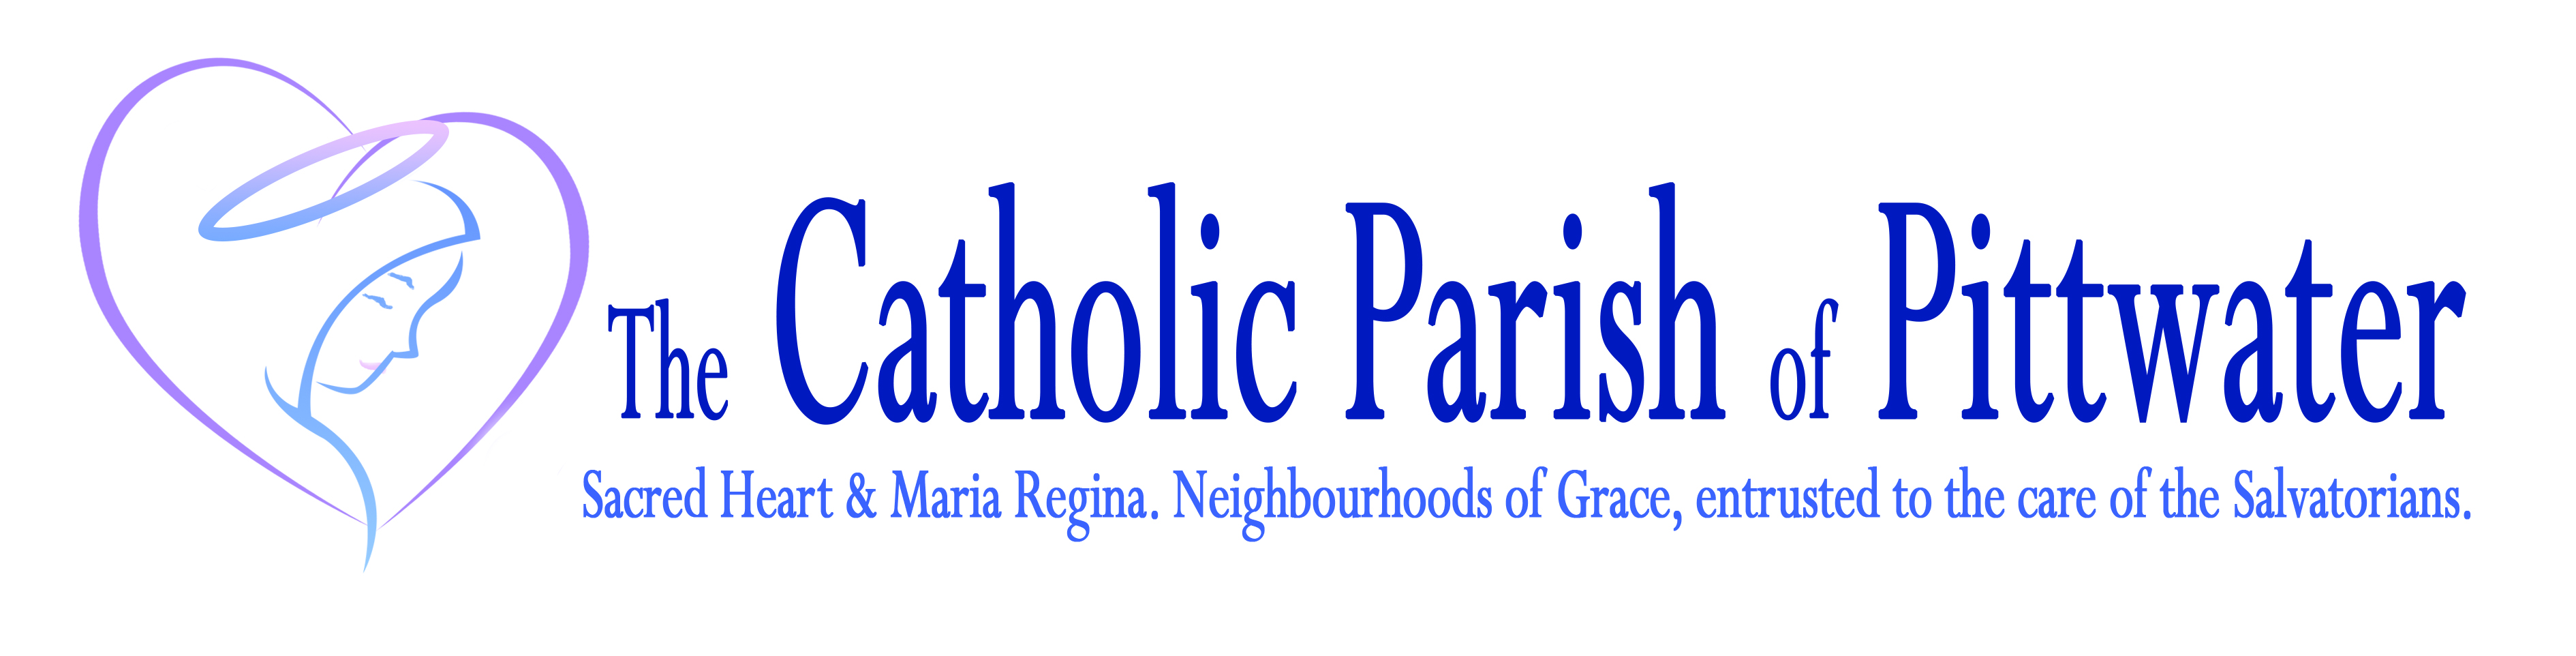 The Catholic Parish of Pittwater